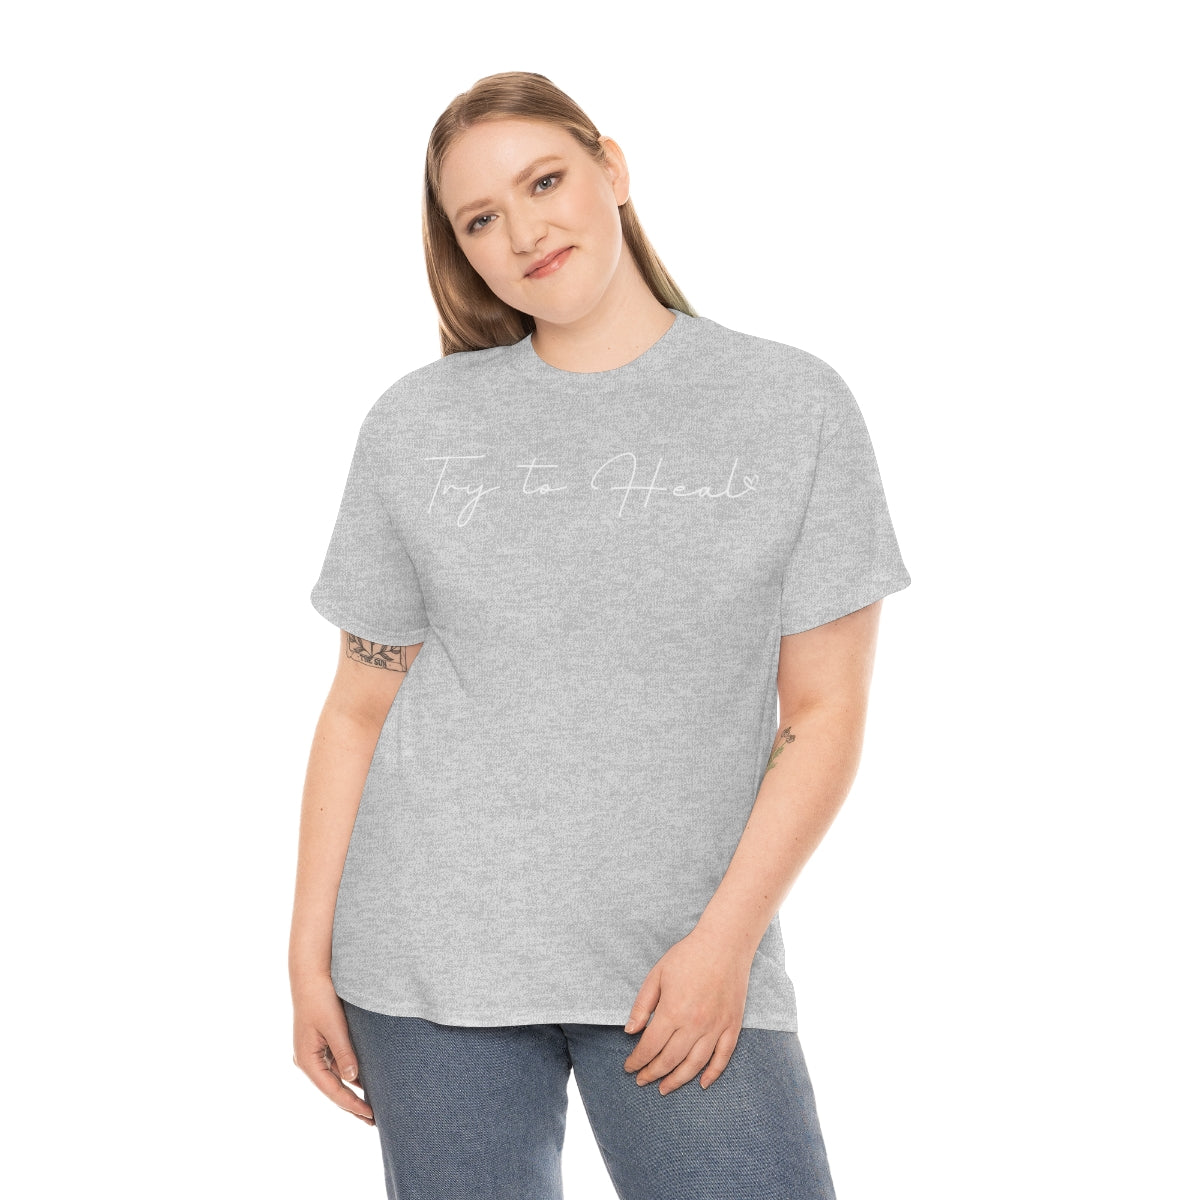 Try to Heal Signature Brand T-Shirt Trauma Survivor T-shirt Graphic 100% Cotton T-shirt- Trauma Recovery, Mental Health T-shirt, Self-Care Gift T-shirt, Black Graphic Tee